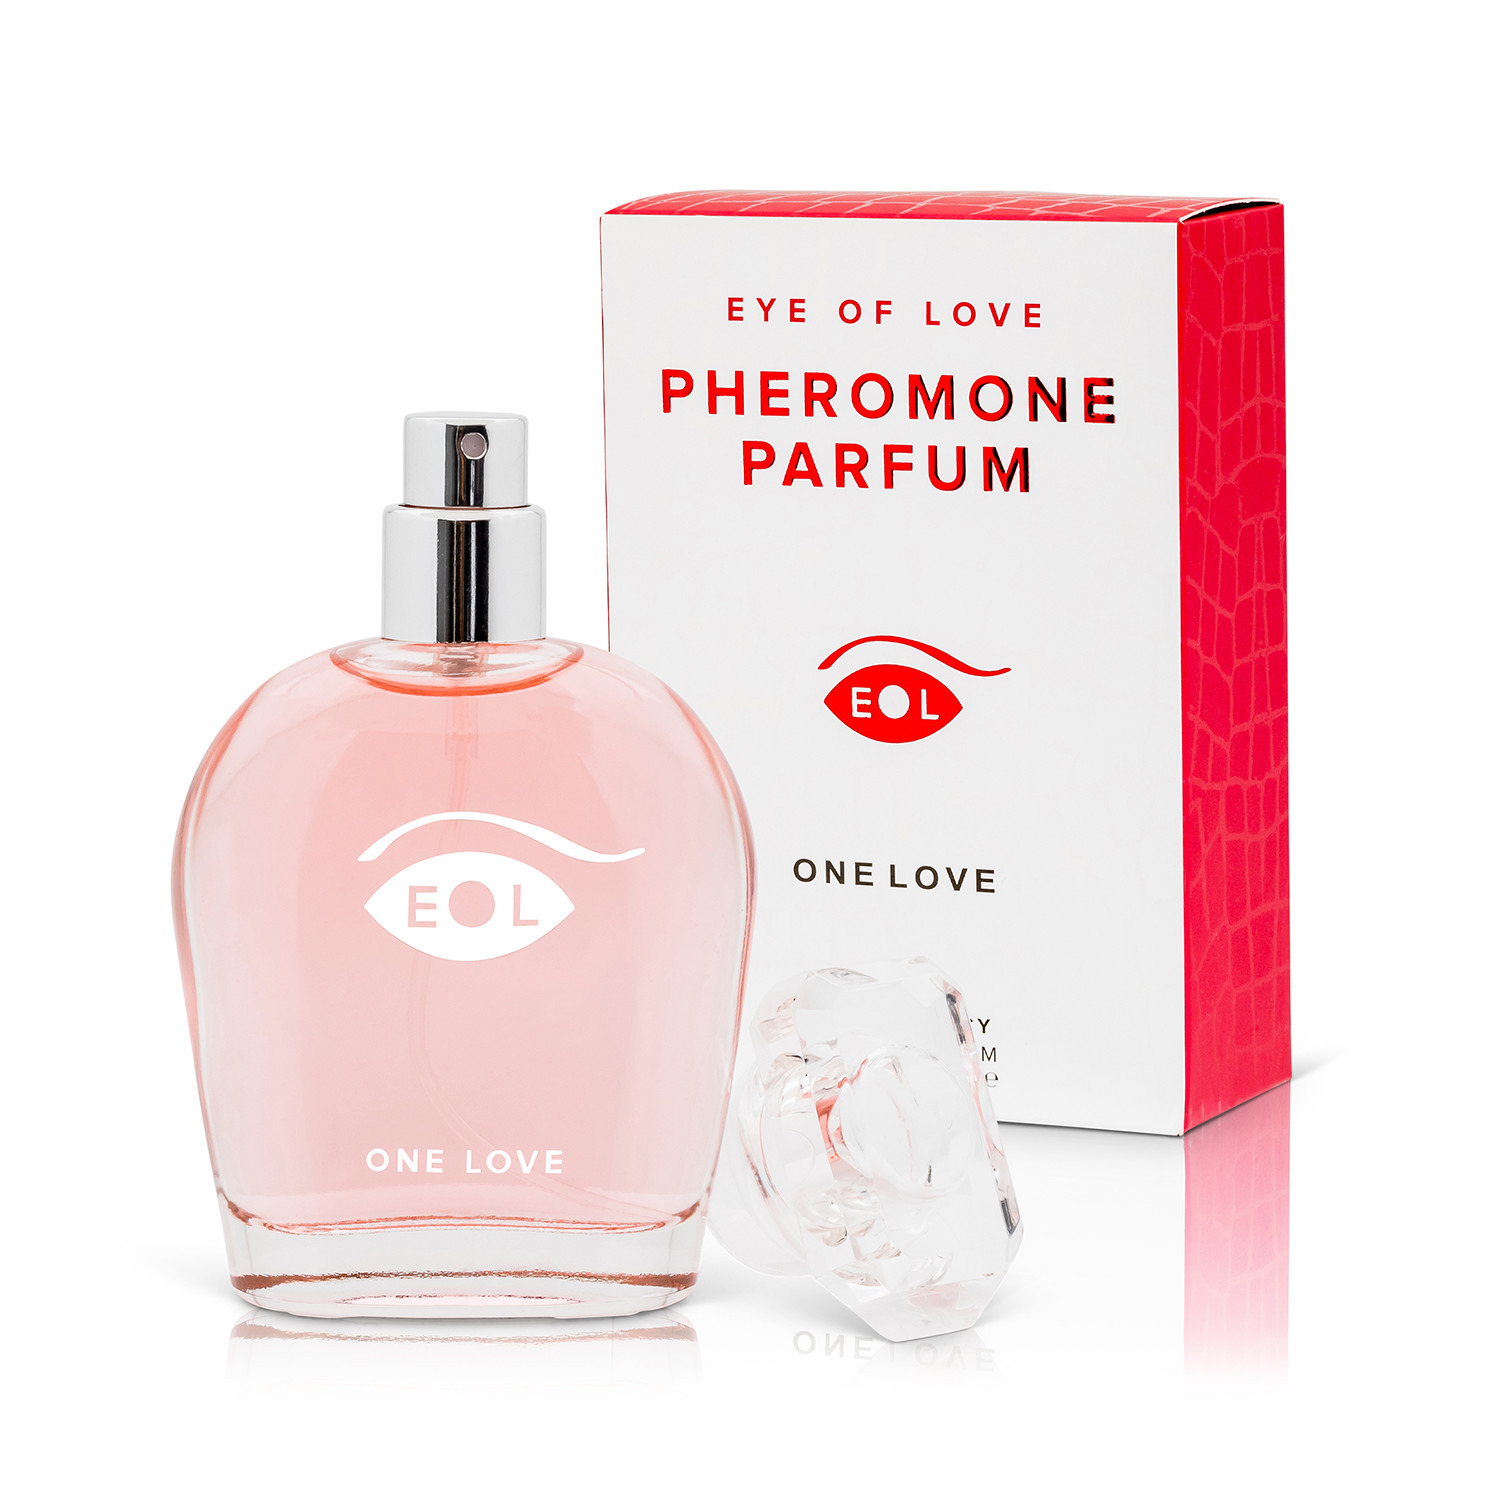 Pheromone Parfum One Love Female Attract Male - Eye of Love